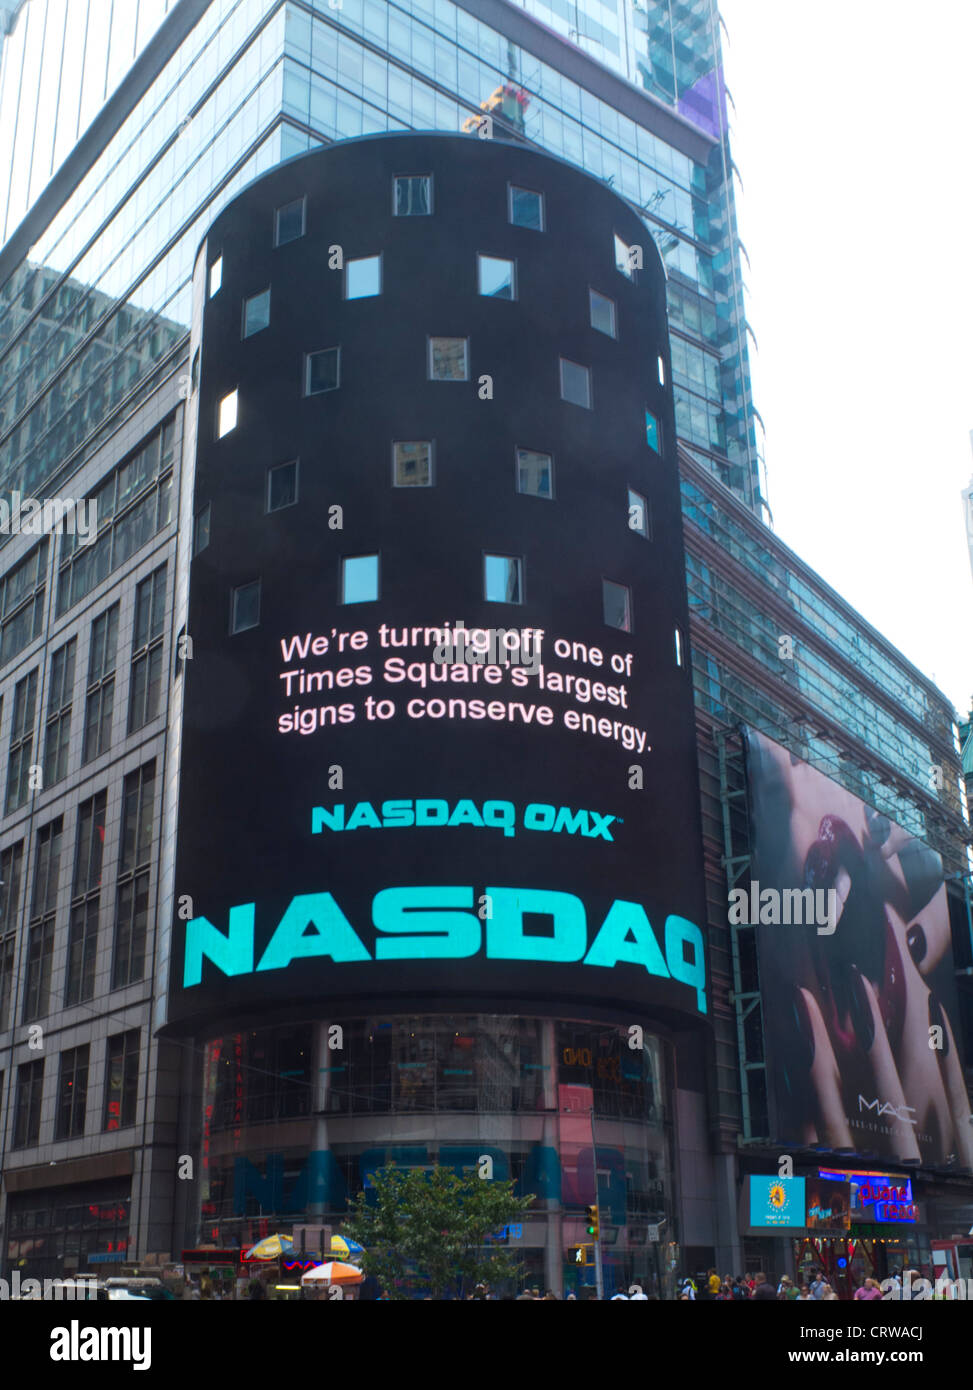 Nasdaq stock market sign in Times Square Stock Photo